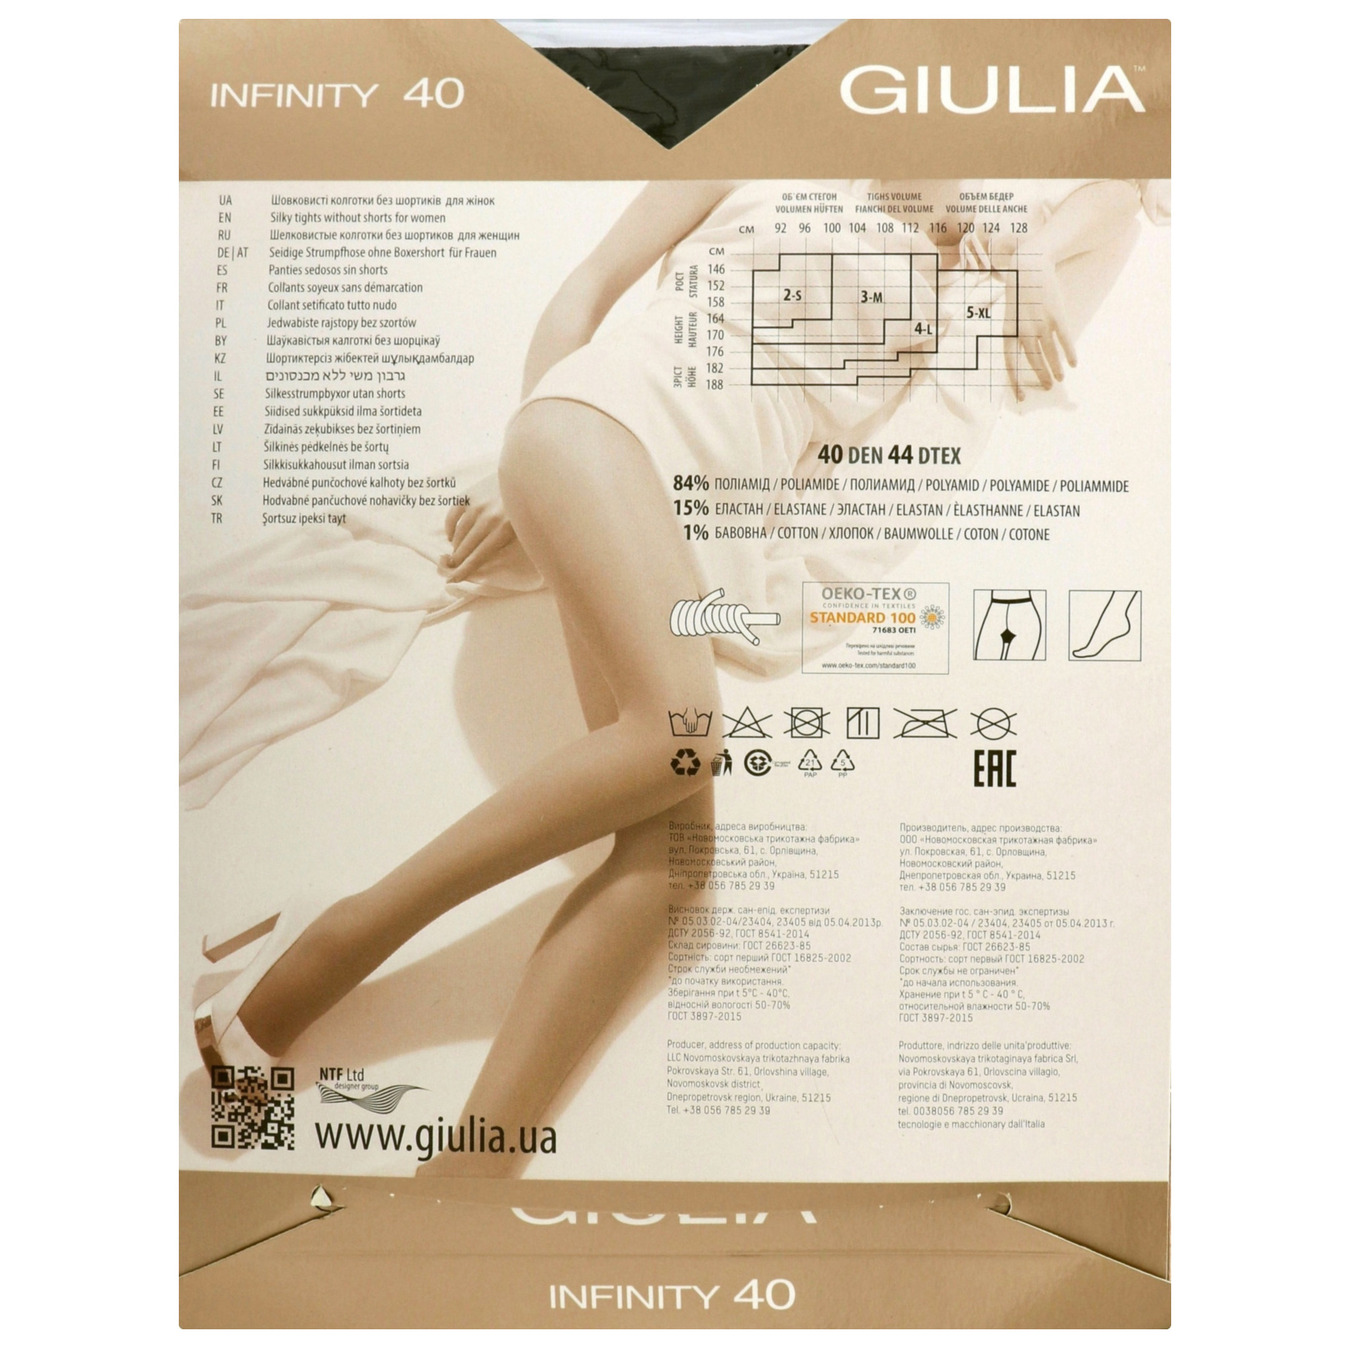 Women's pantyhose Giulia Infiniti 40 den nero size 5XL 2